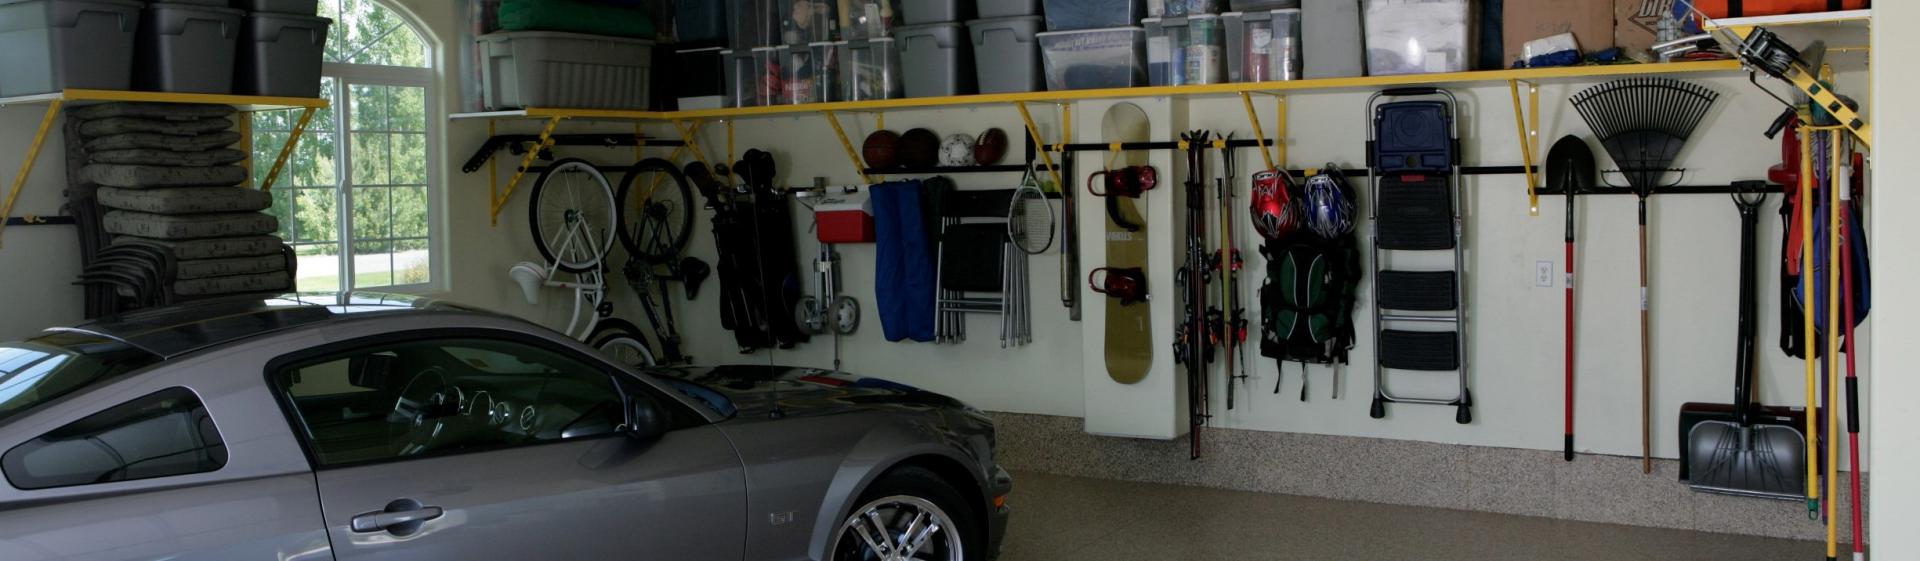 car garage storage hooks